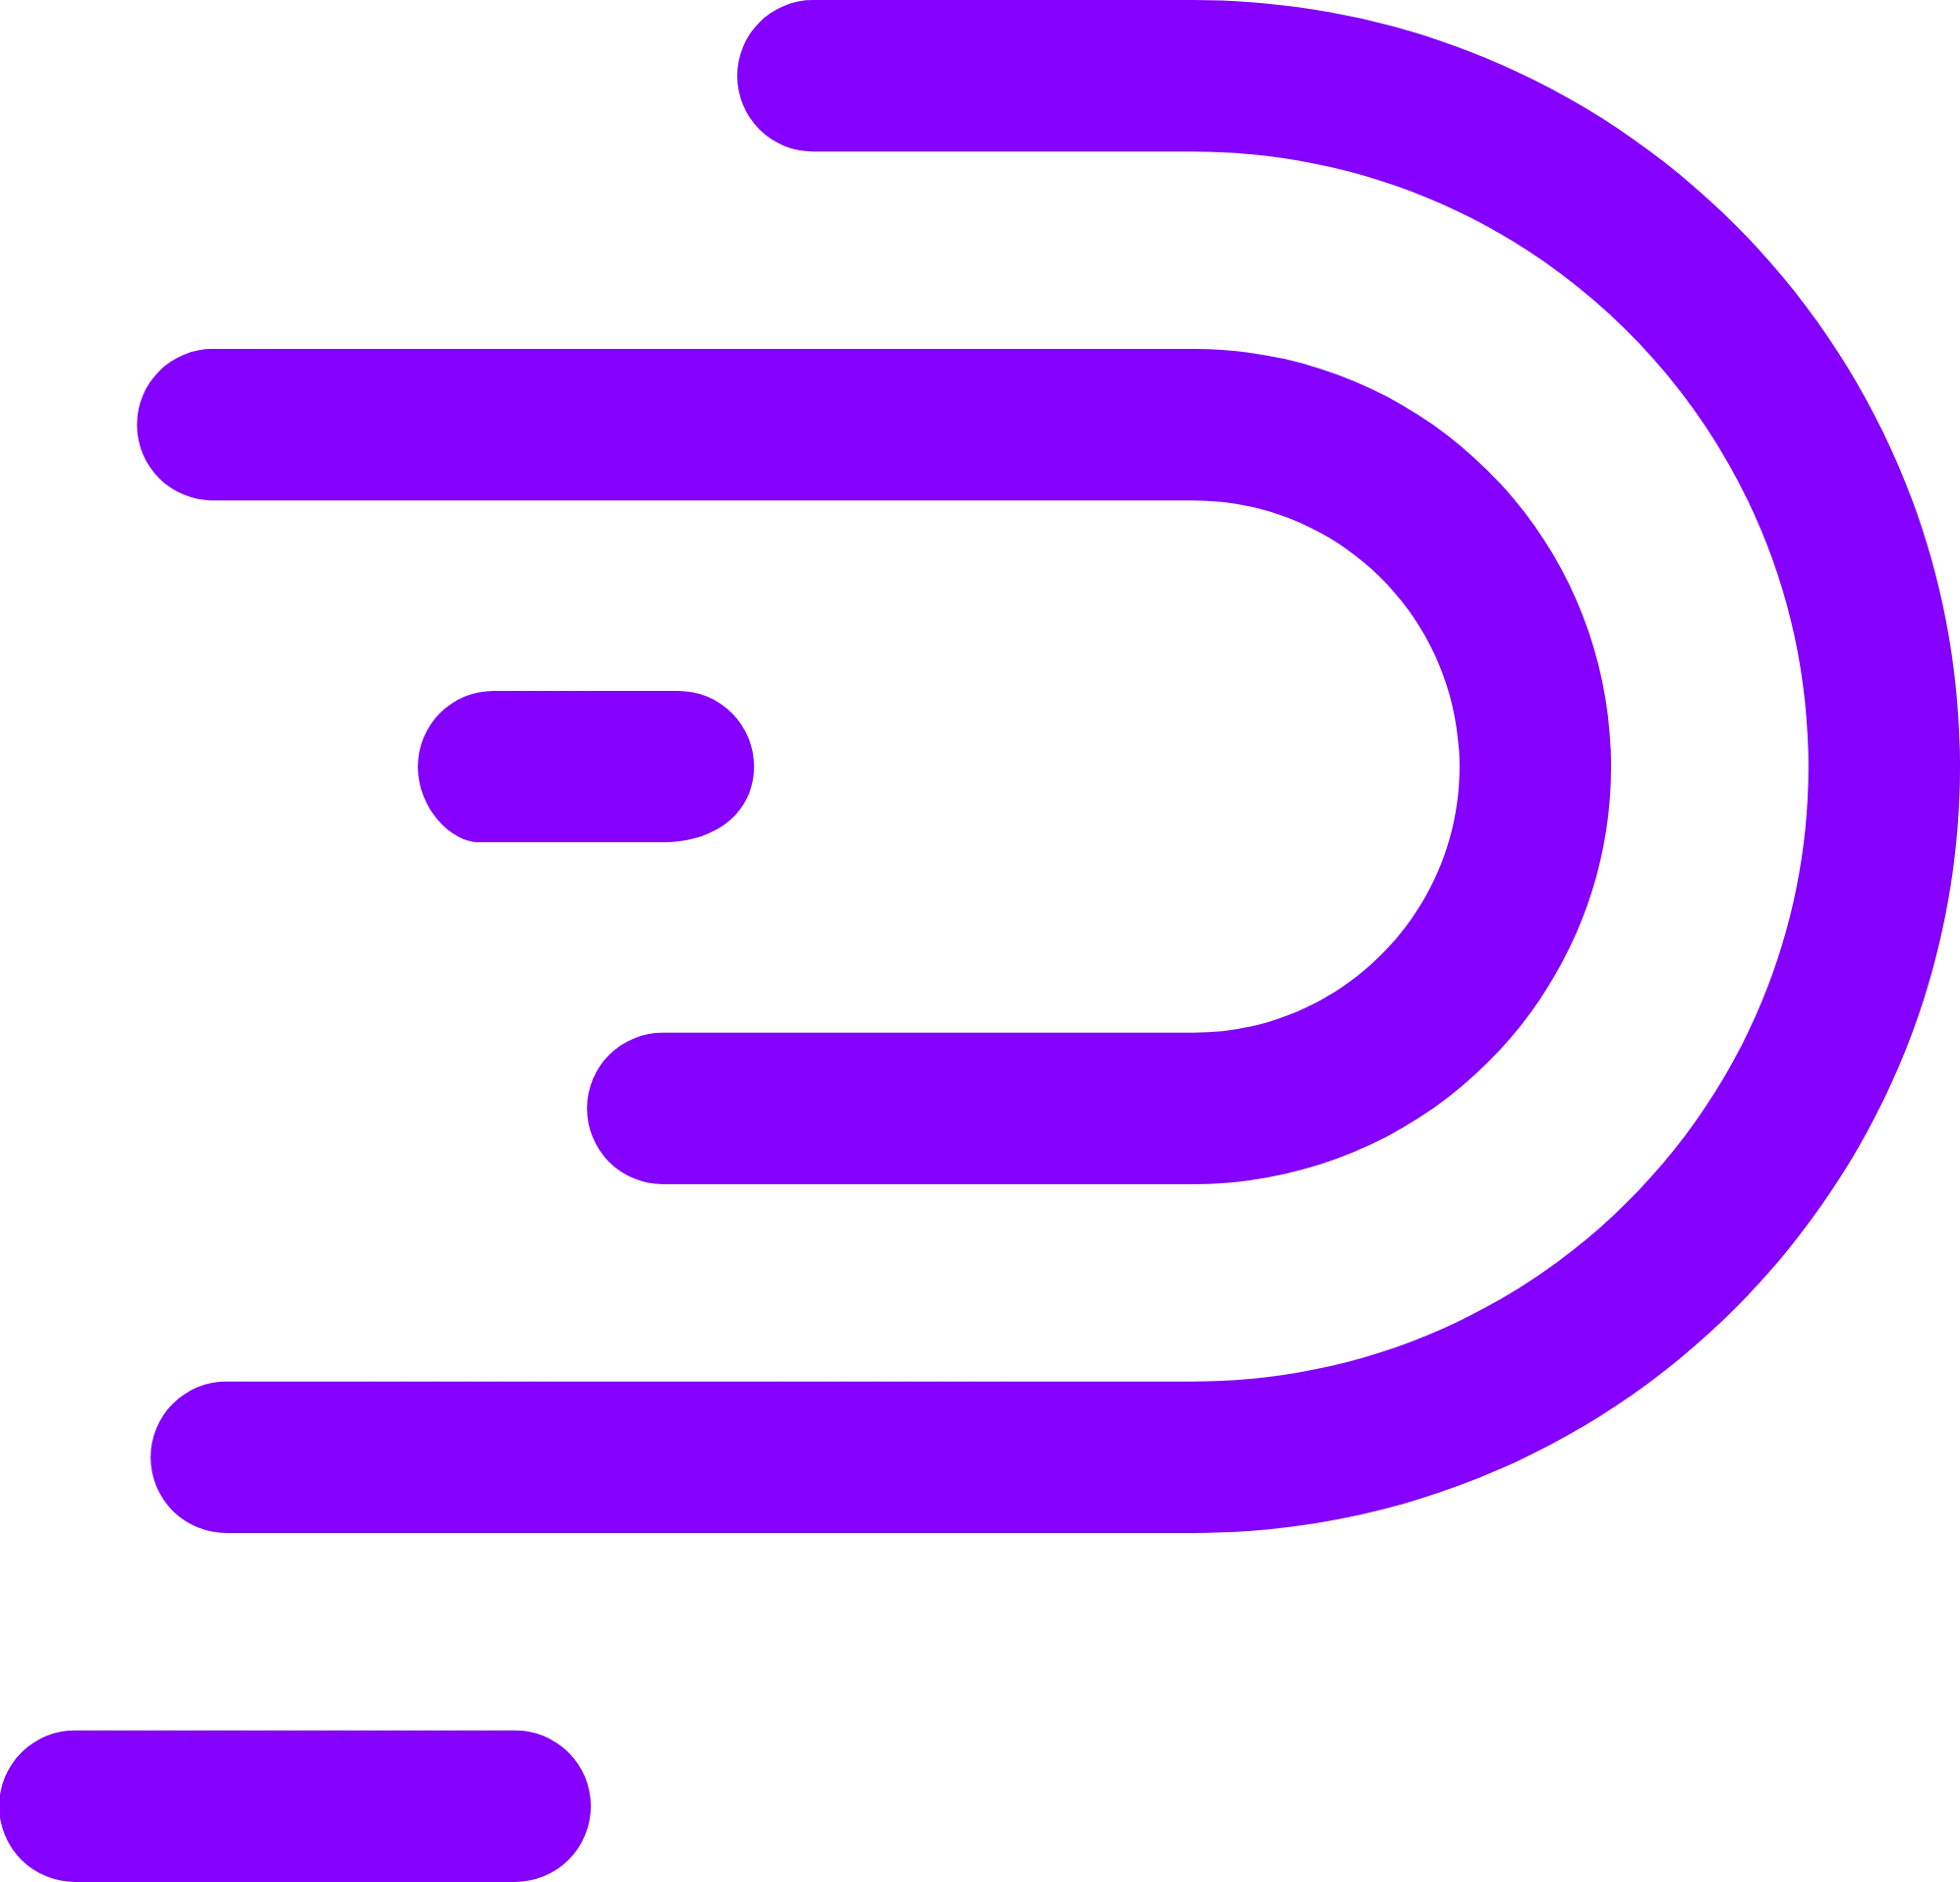 PolySwarm logo in svg format